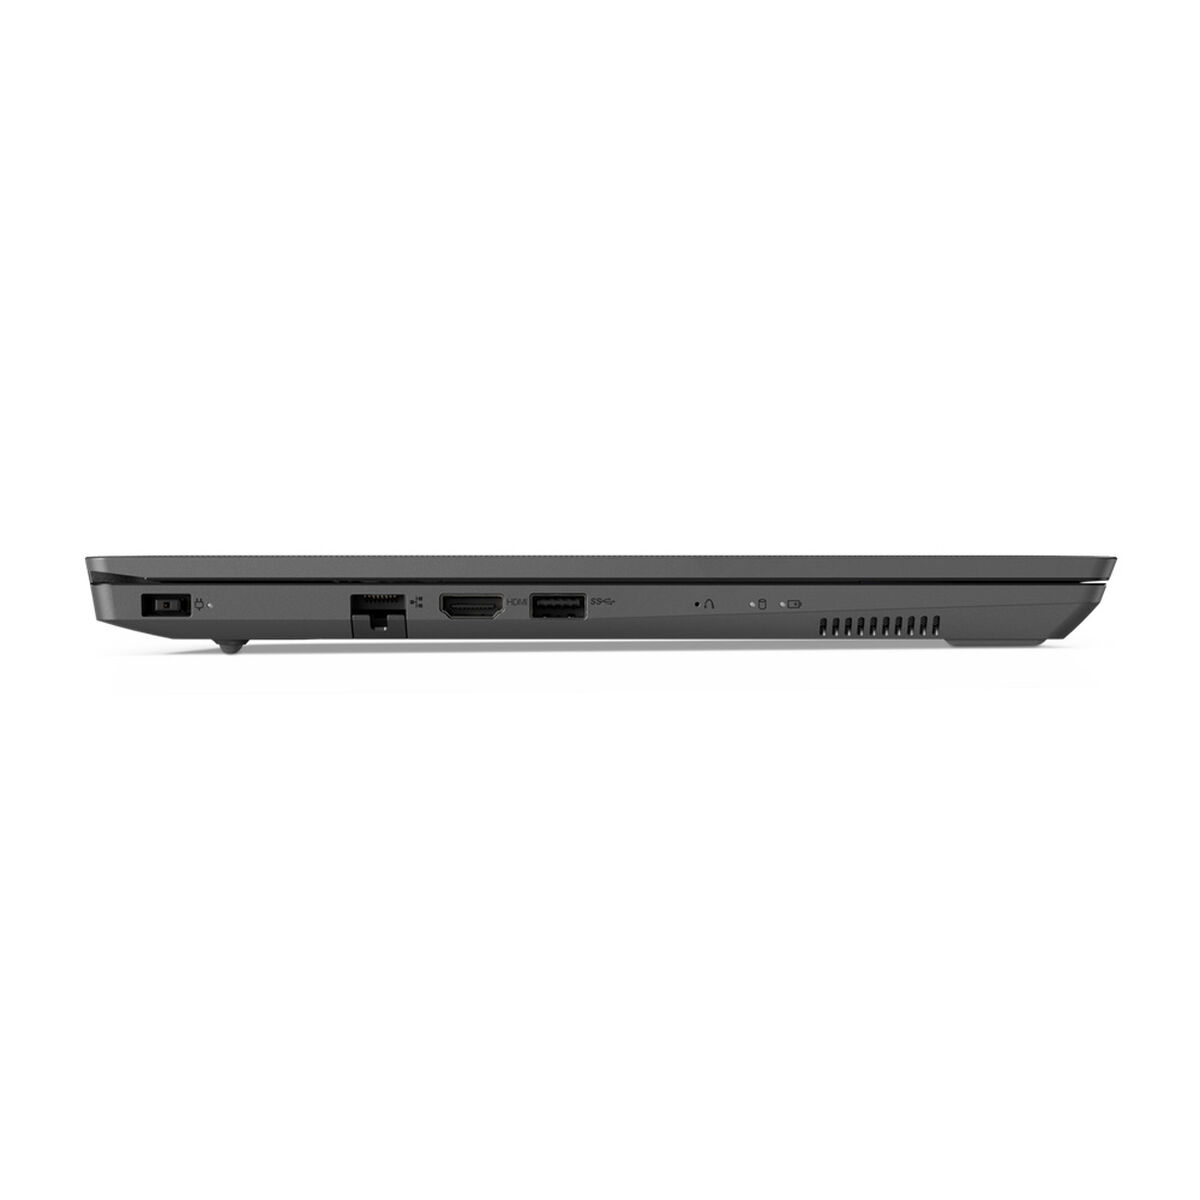 Notebook Lenovo V130-14IKB Core i3 4GB 500GB 14"